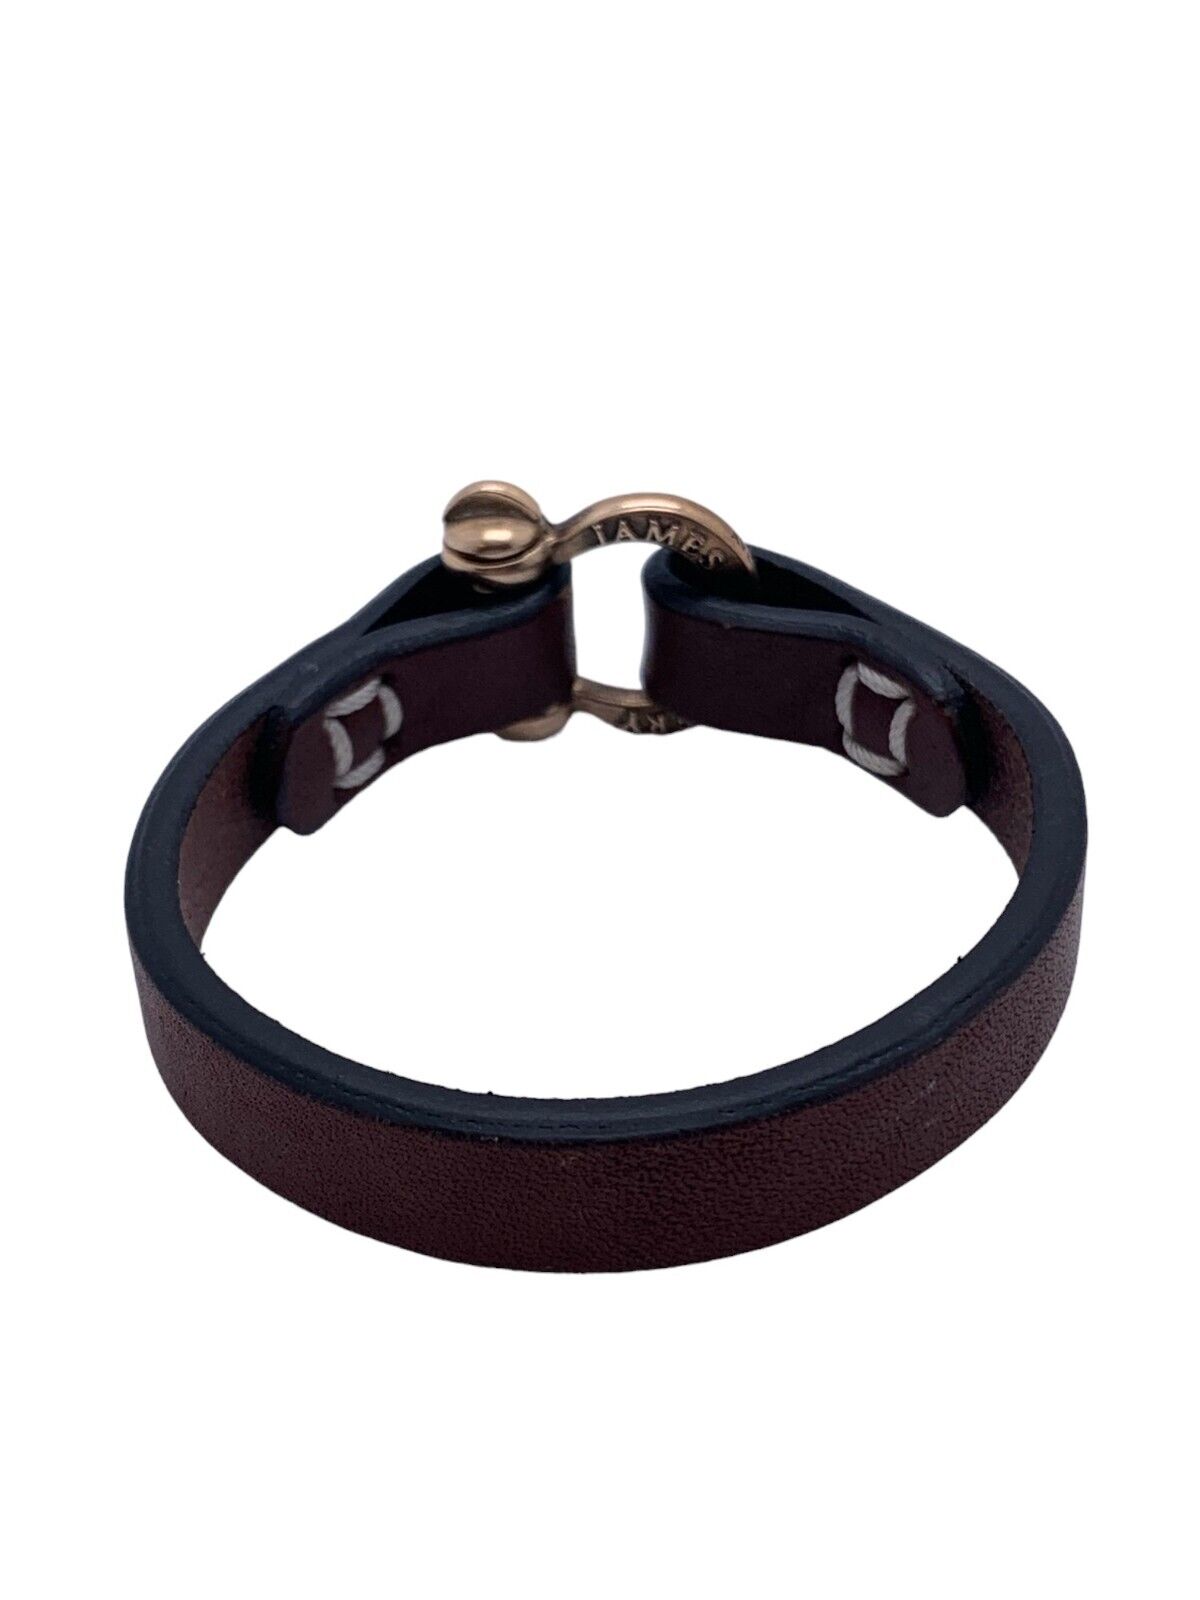 James Avery "HoldFast" Leather & Bronze Bracelet - image 12